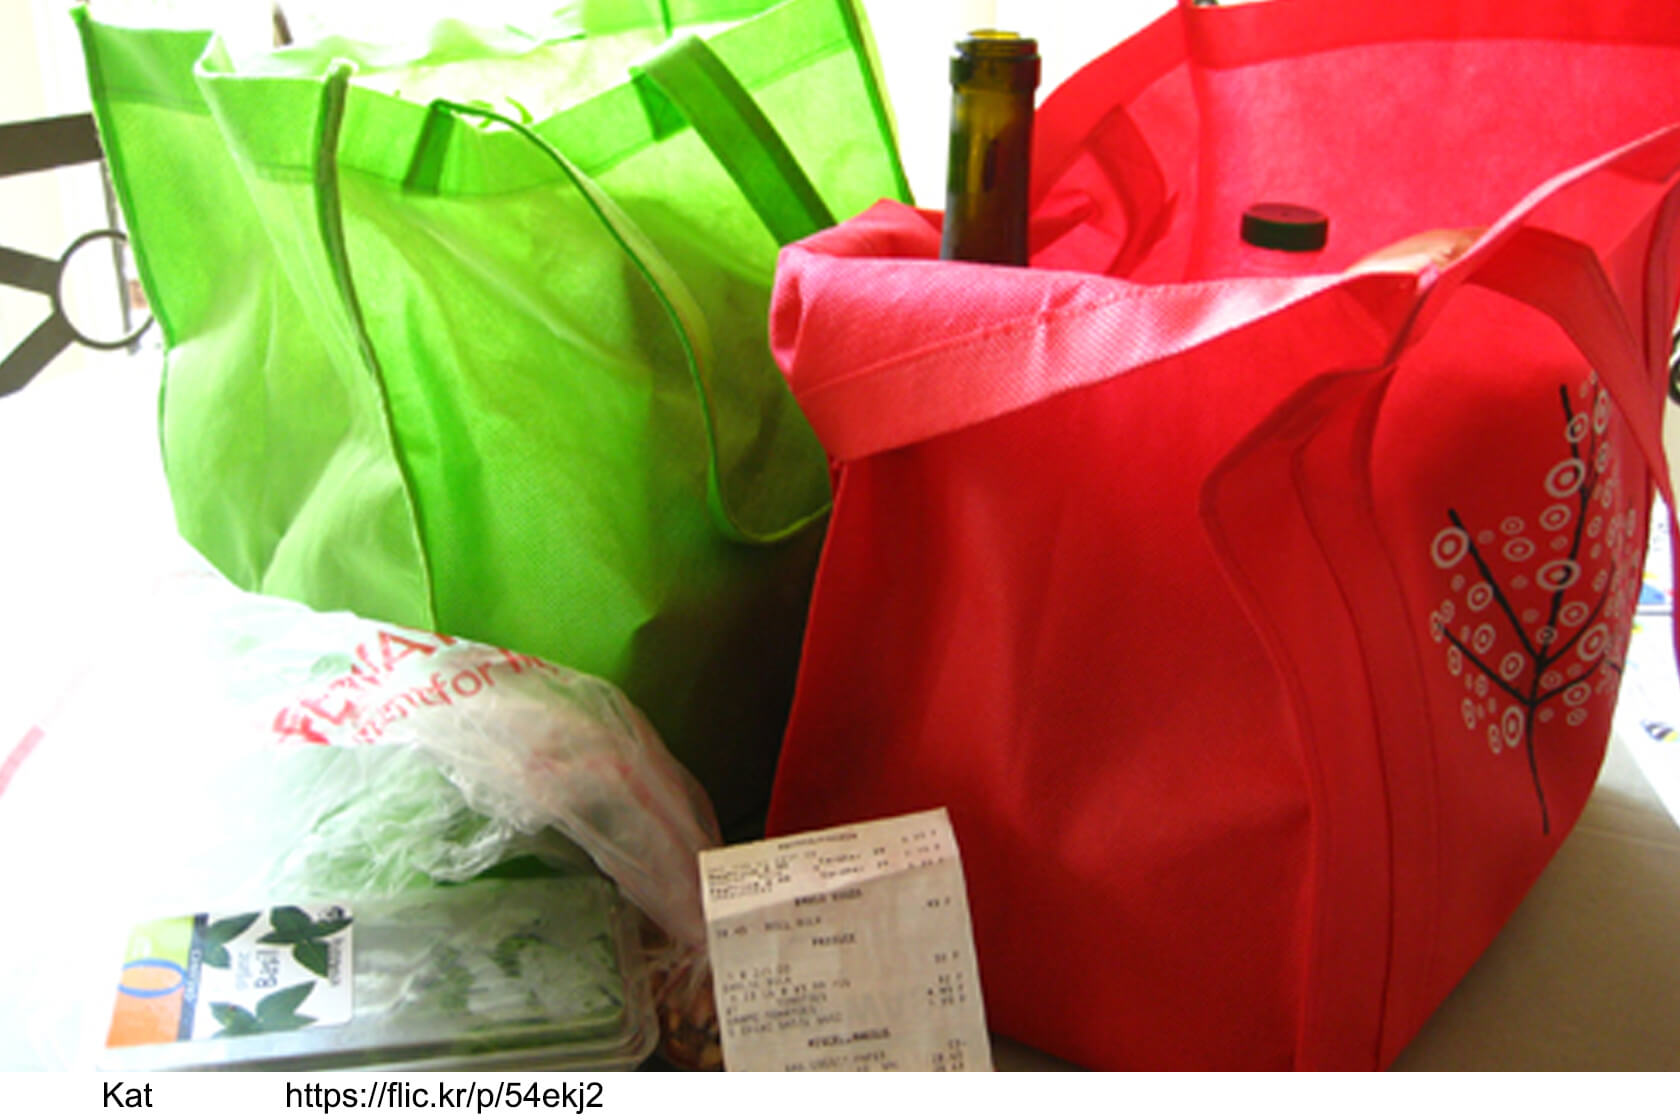 New Jersey considers banning plastic bags, straws, Styrofoam - WHYY